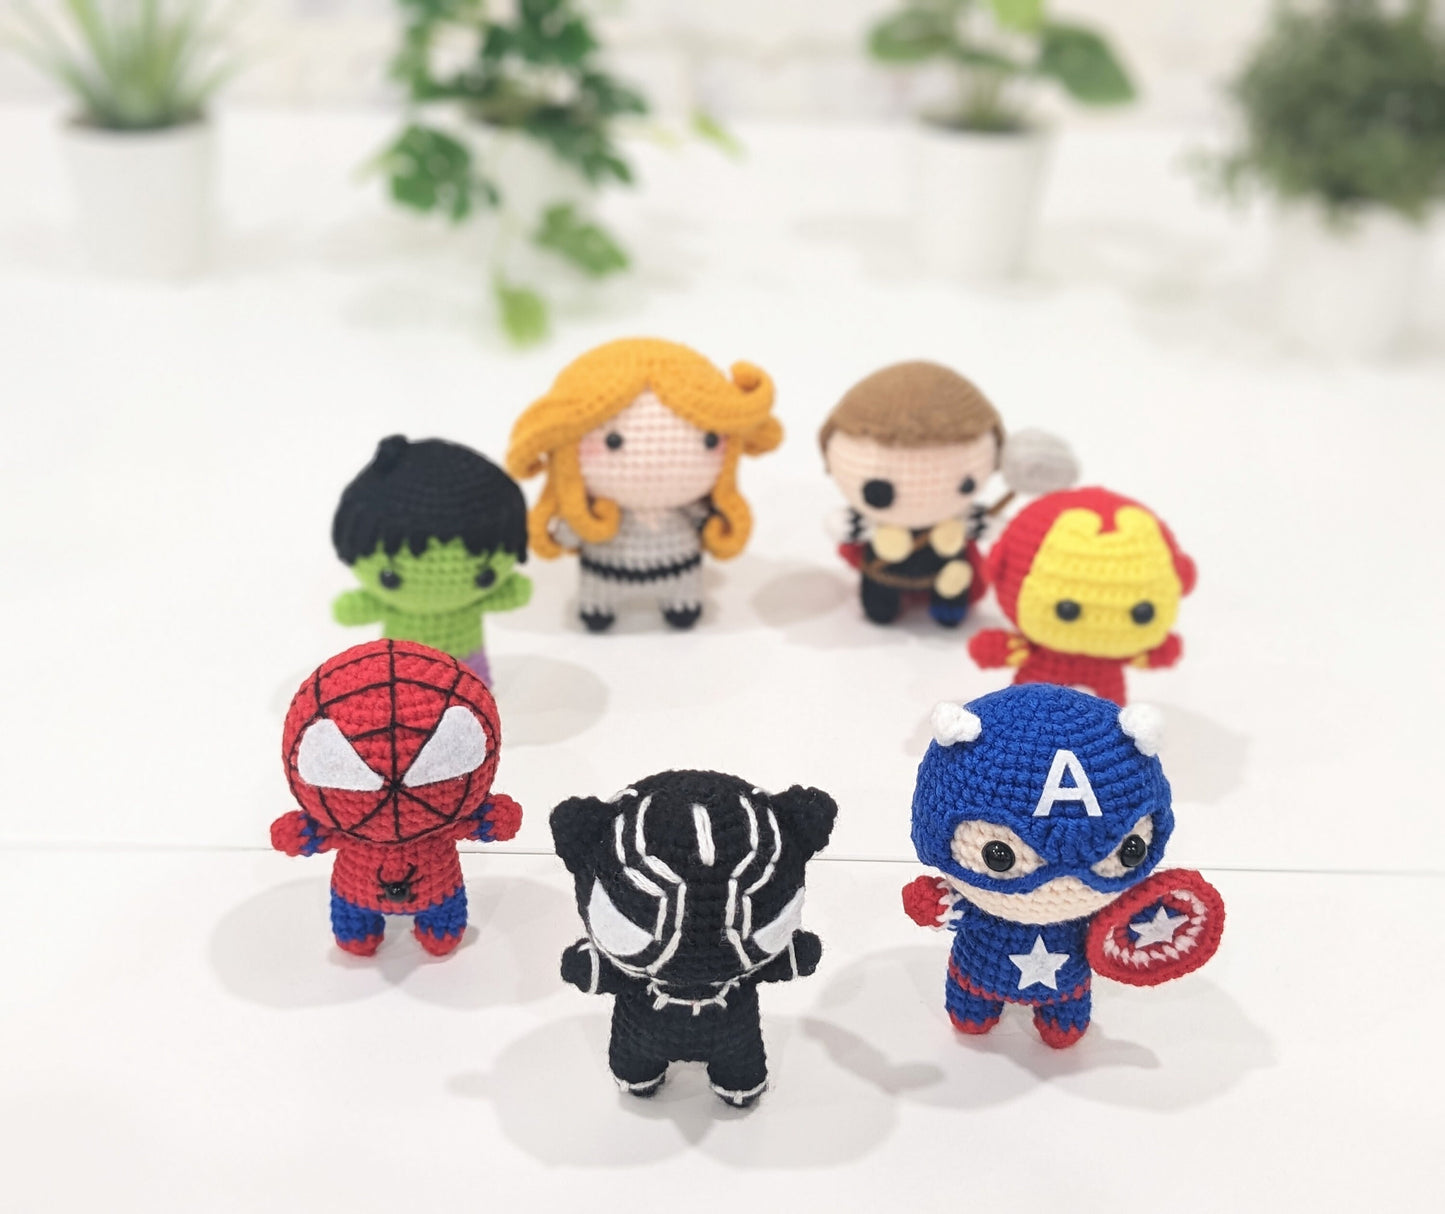 Marvel Avengers Superheroes, Spiderman, Iron Man, Hulk, Thor, Captain America, Black Panther, Black Widow, Handmade Crochet Amigurumi Dolls